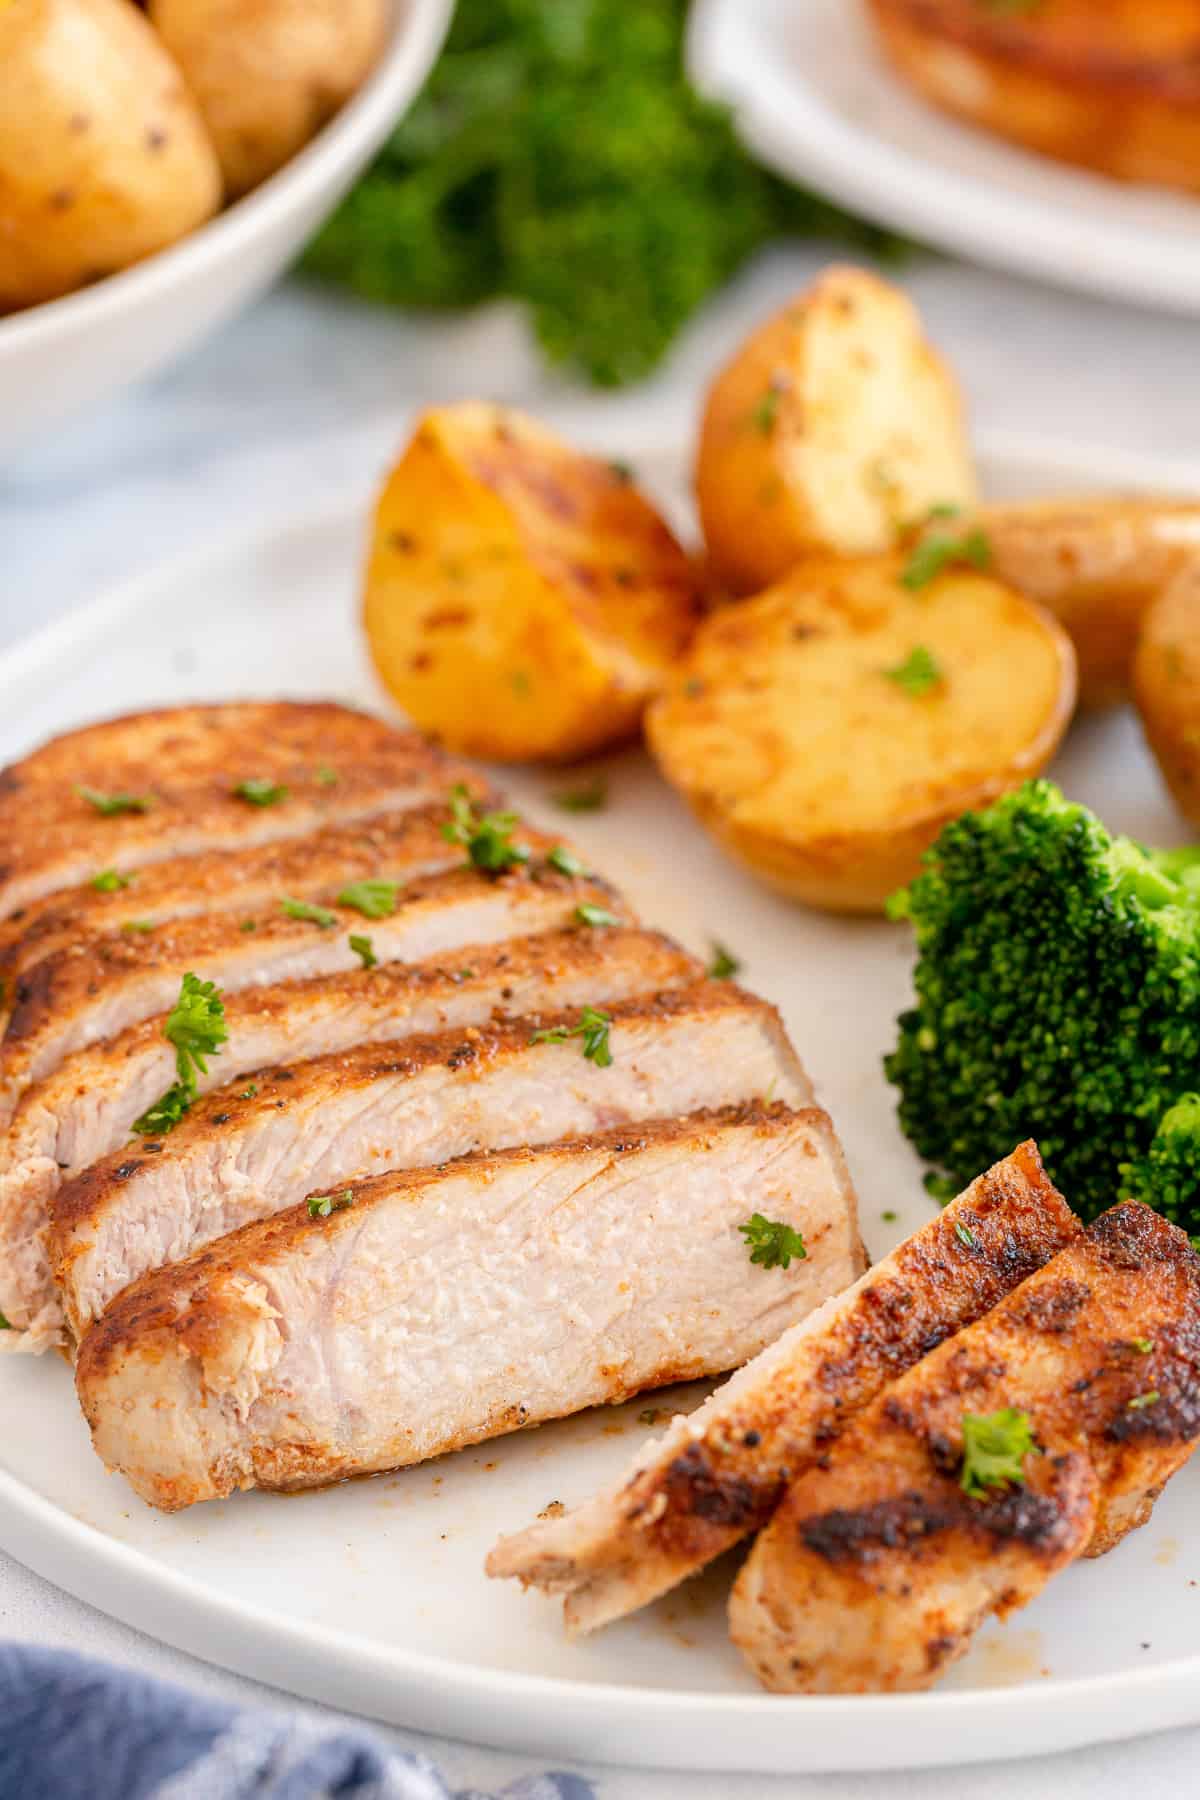 A sliced boneless pork chop on a plate with broccoli and potatoes.